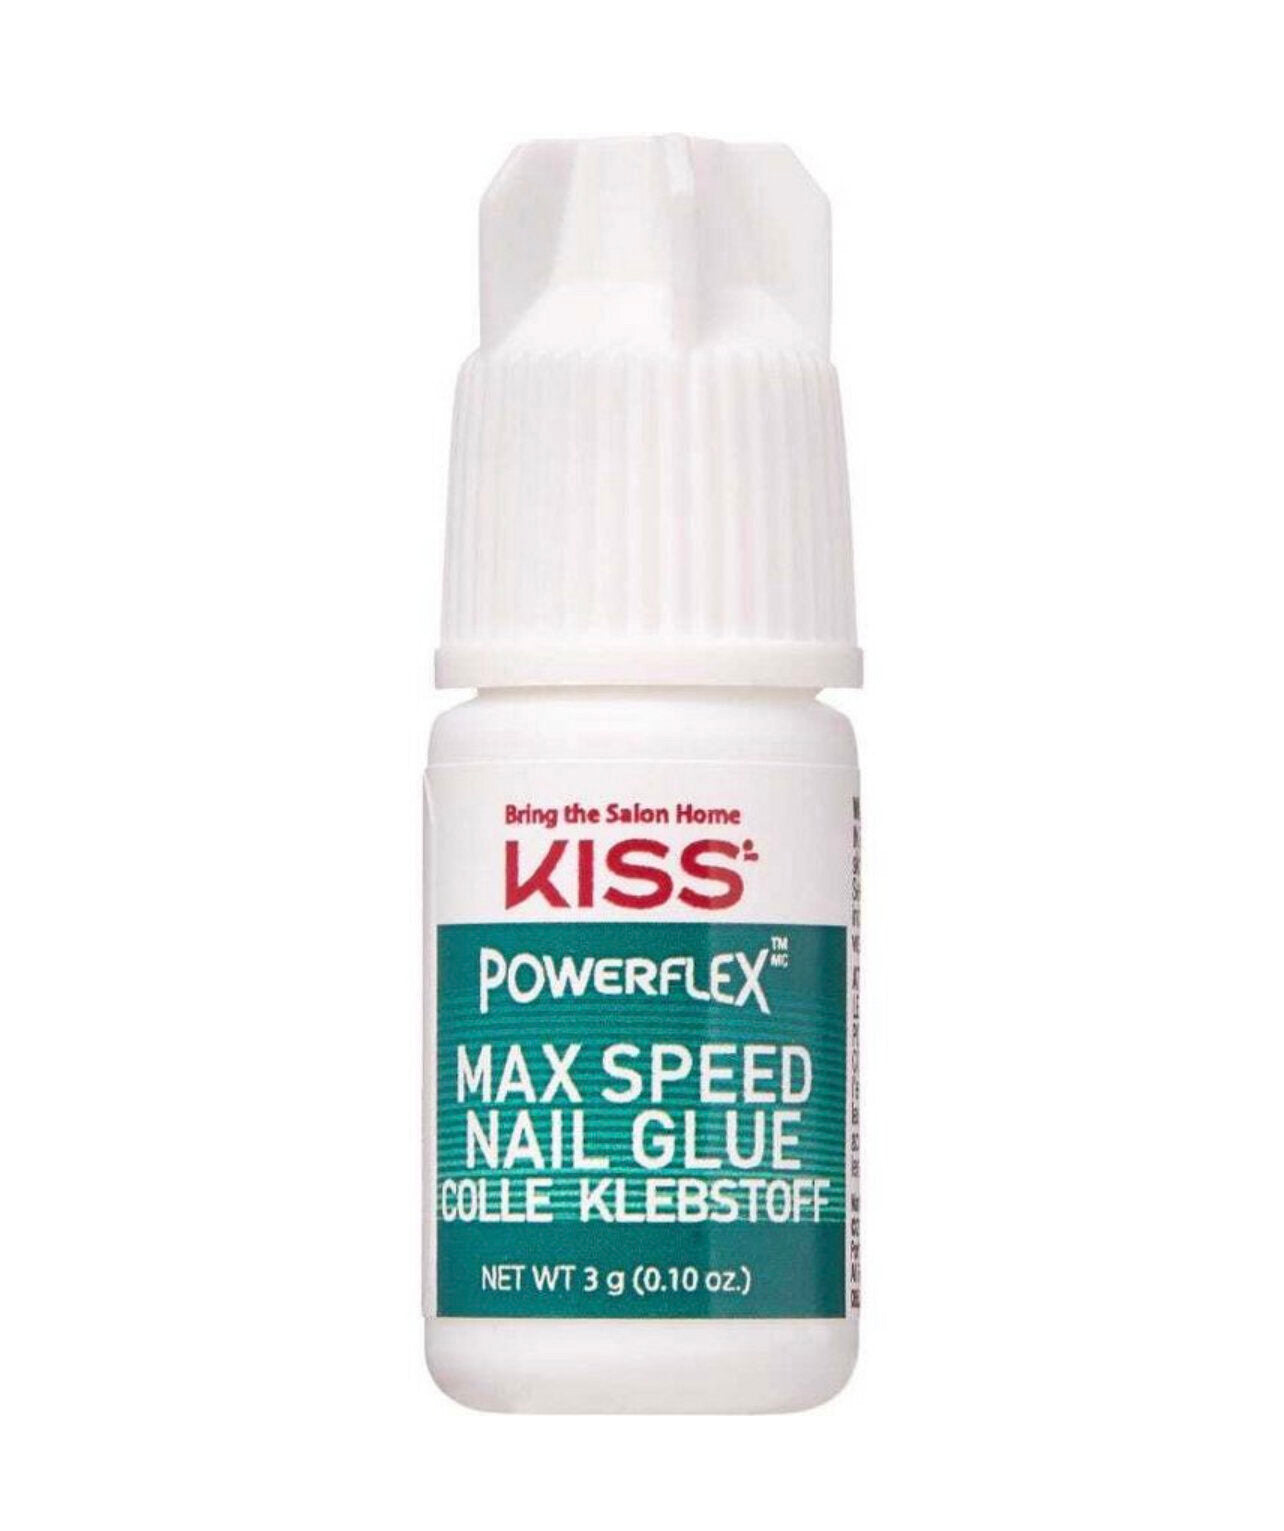 Bottle of nail glue on white background